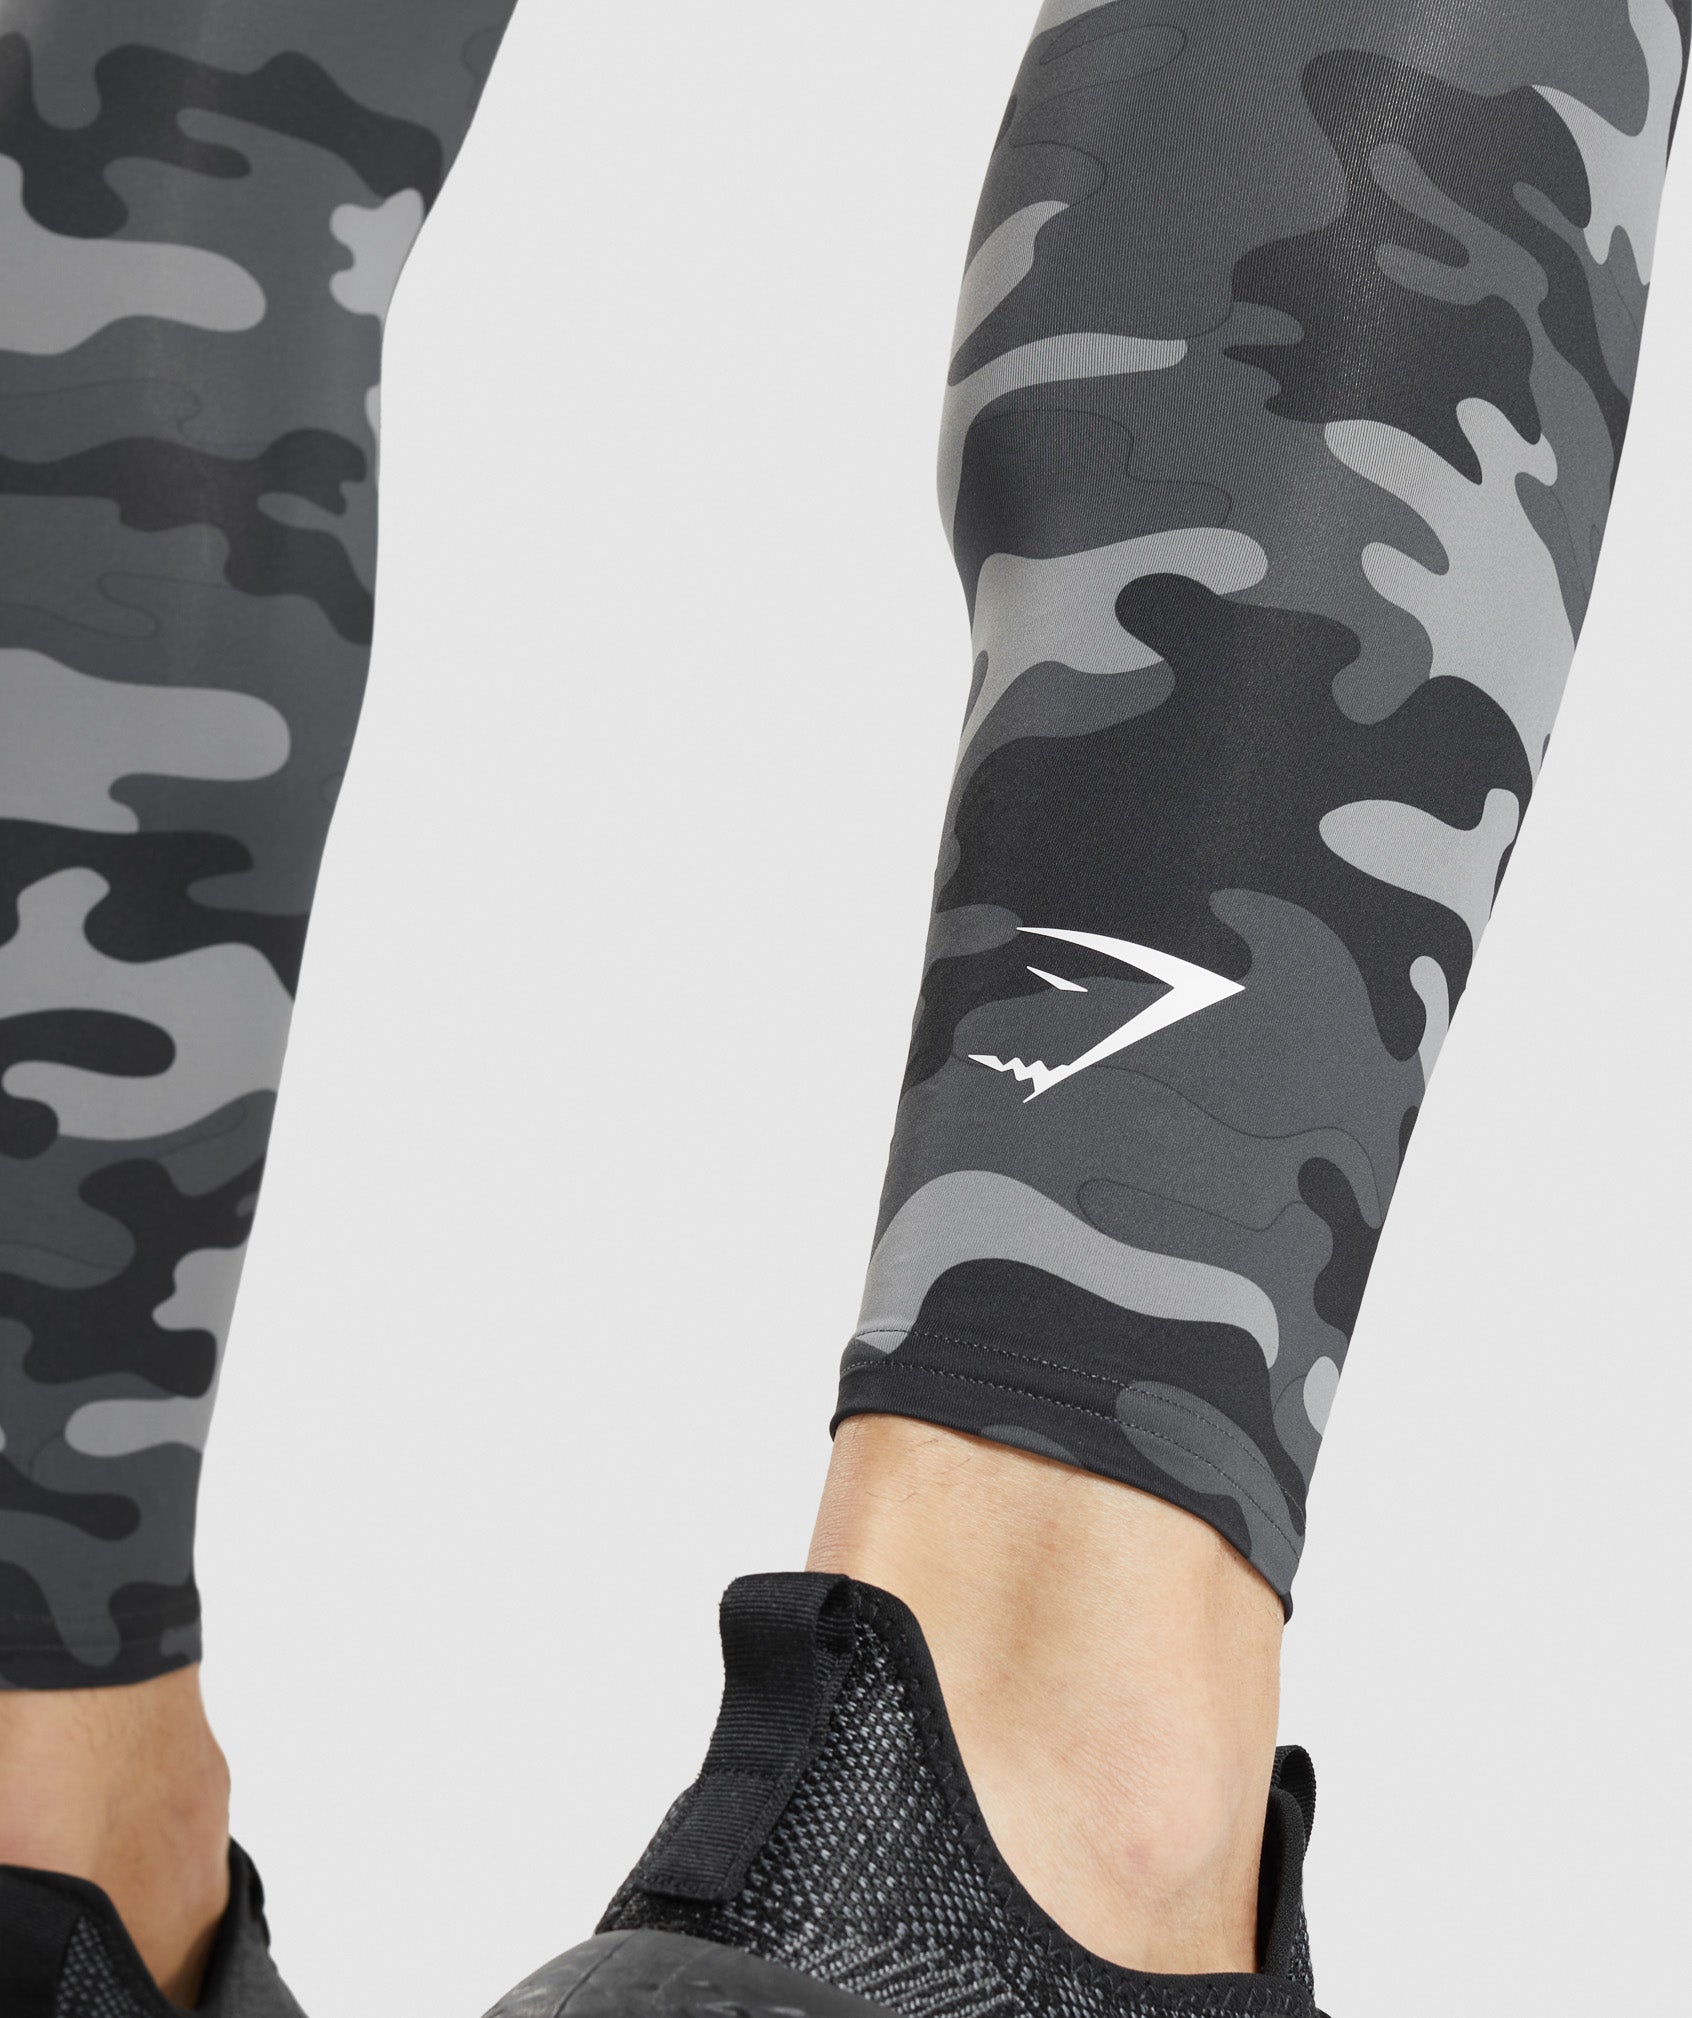 Gymshark Element Baselayer Leggings - Silhouette Grey